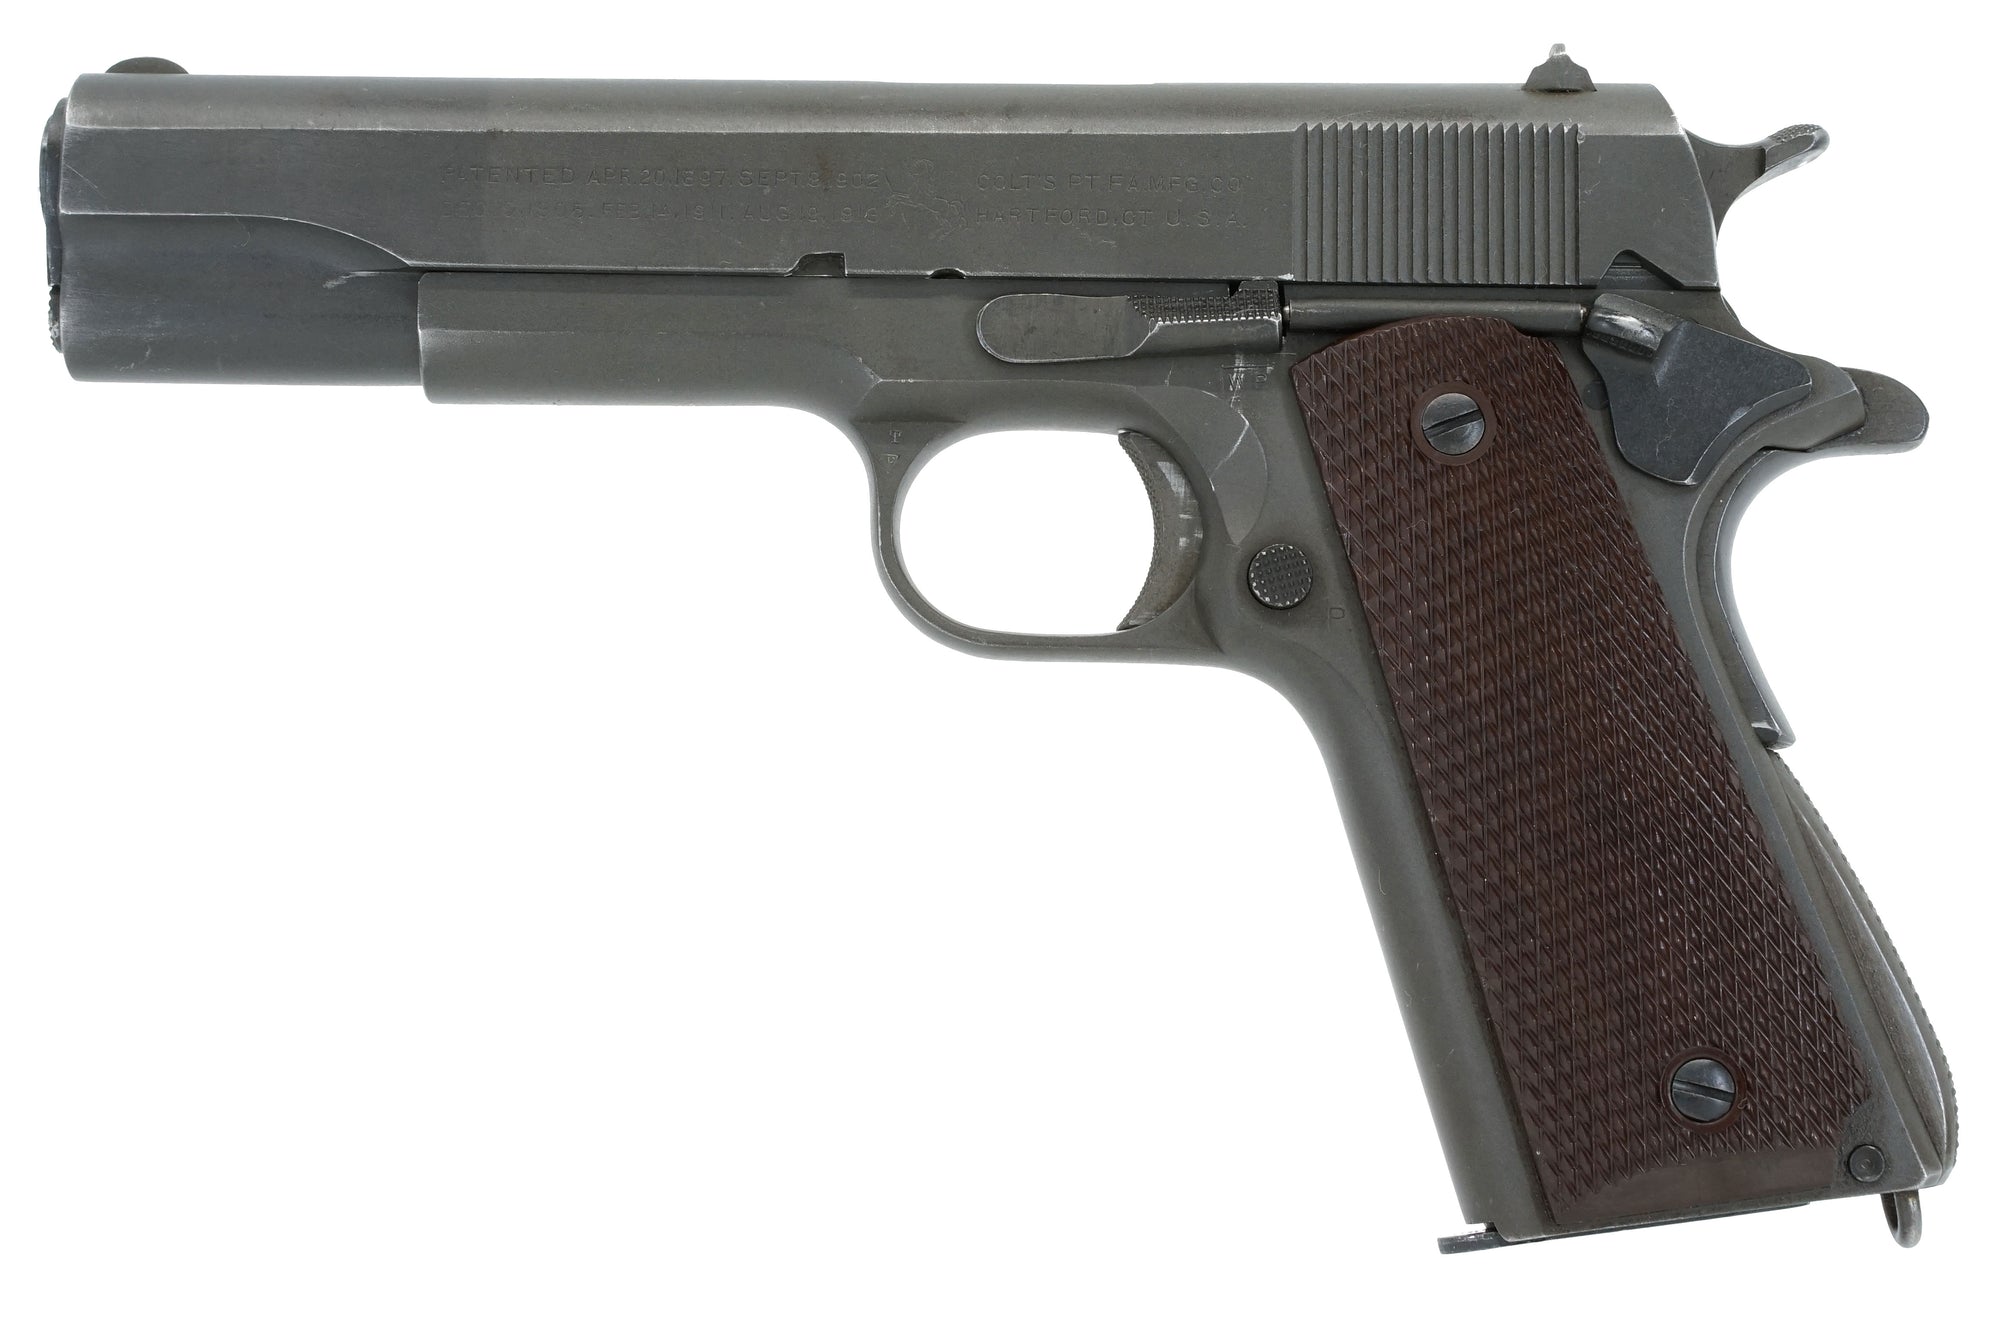 Colt M1911A1 45ACP SN:765135 MFG:1942